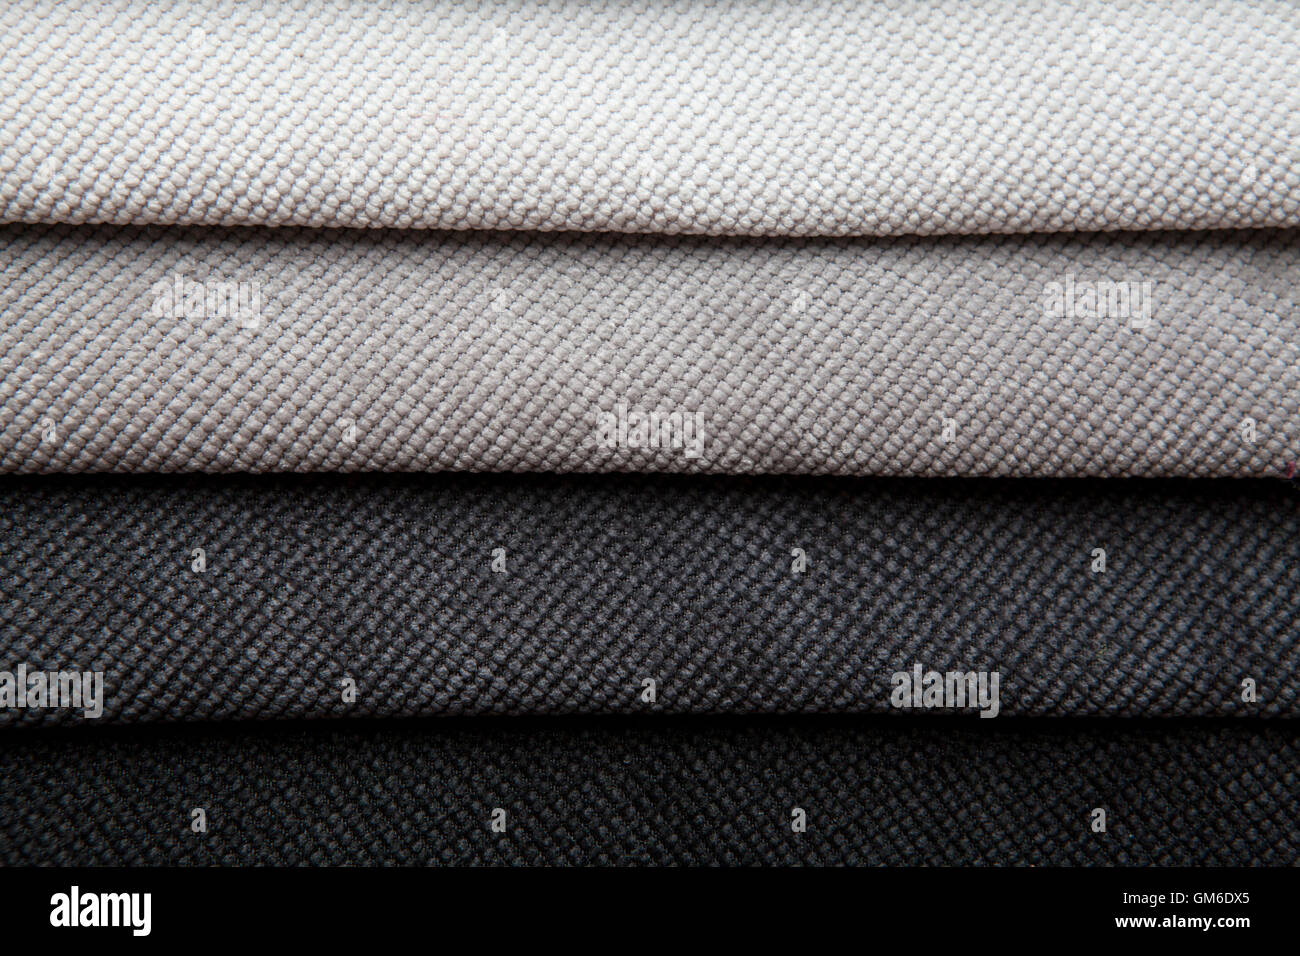 Shades of gray fabric samples Stock Photo